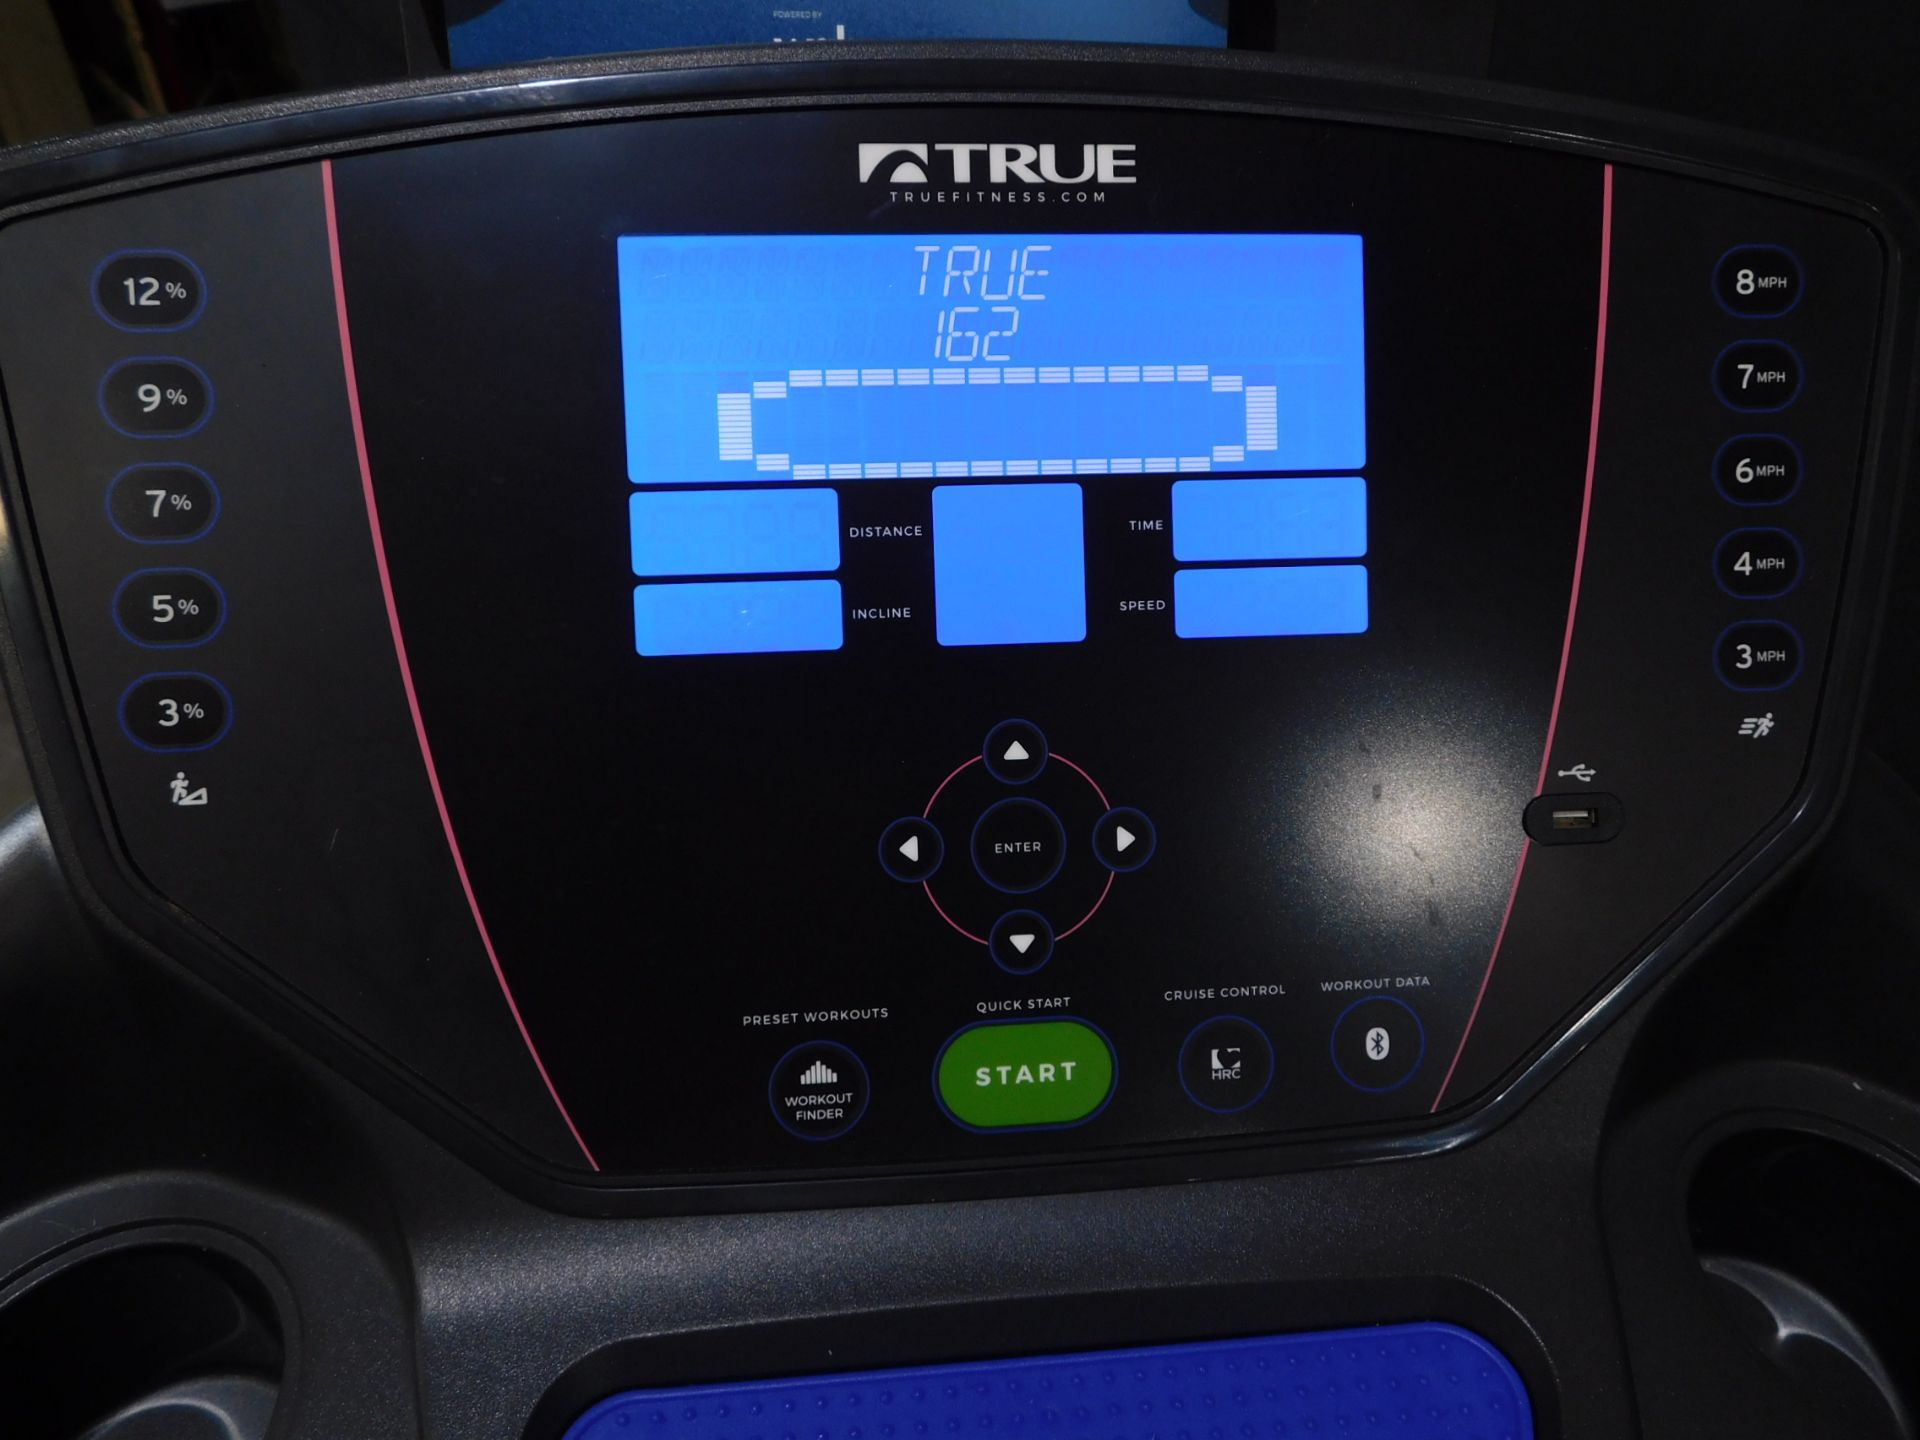 True Performance 300 Treadmill-Demonstrator Unit - Image 10 of 16